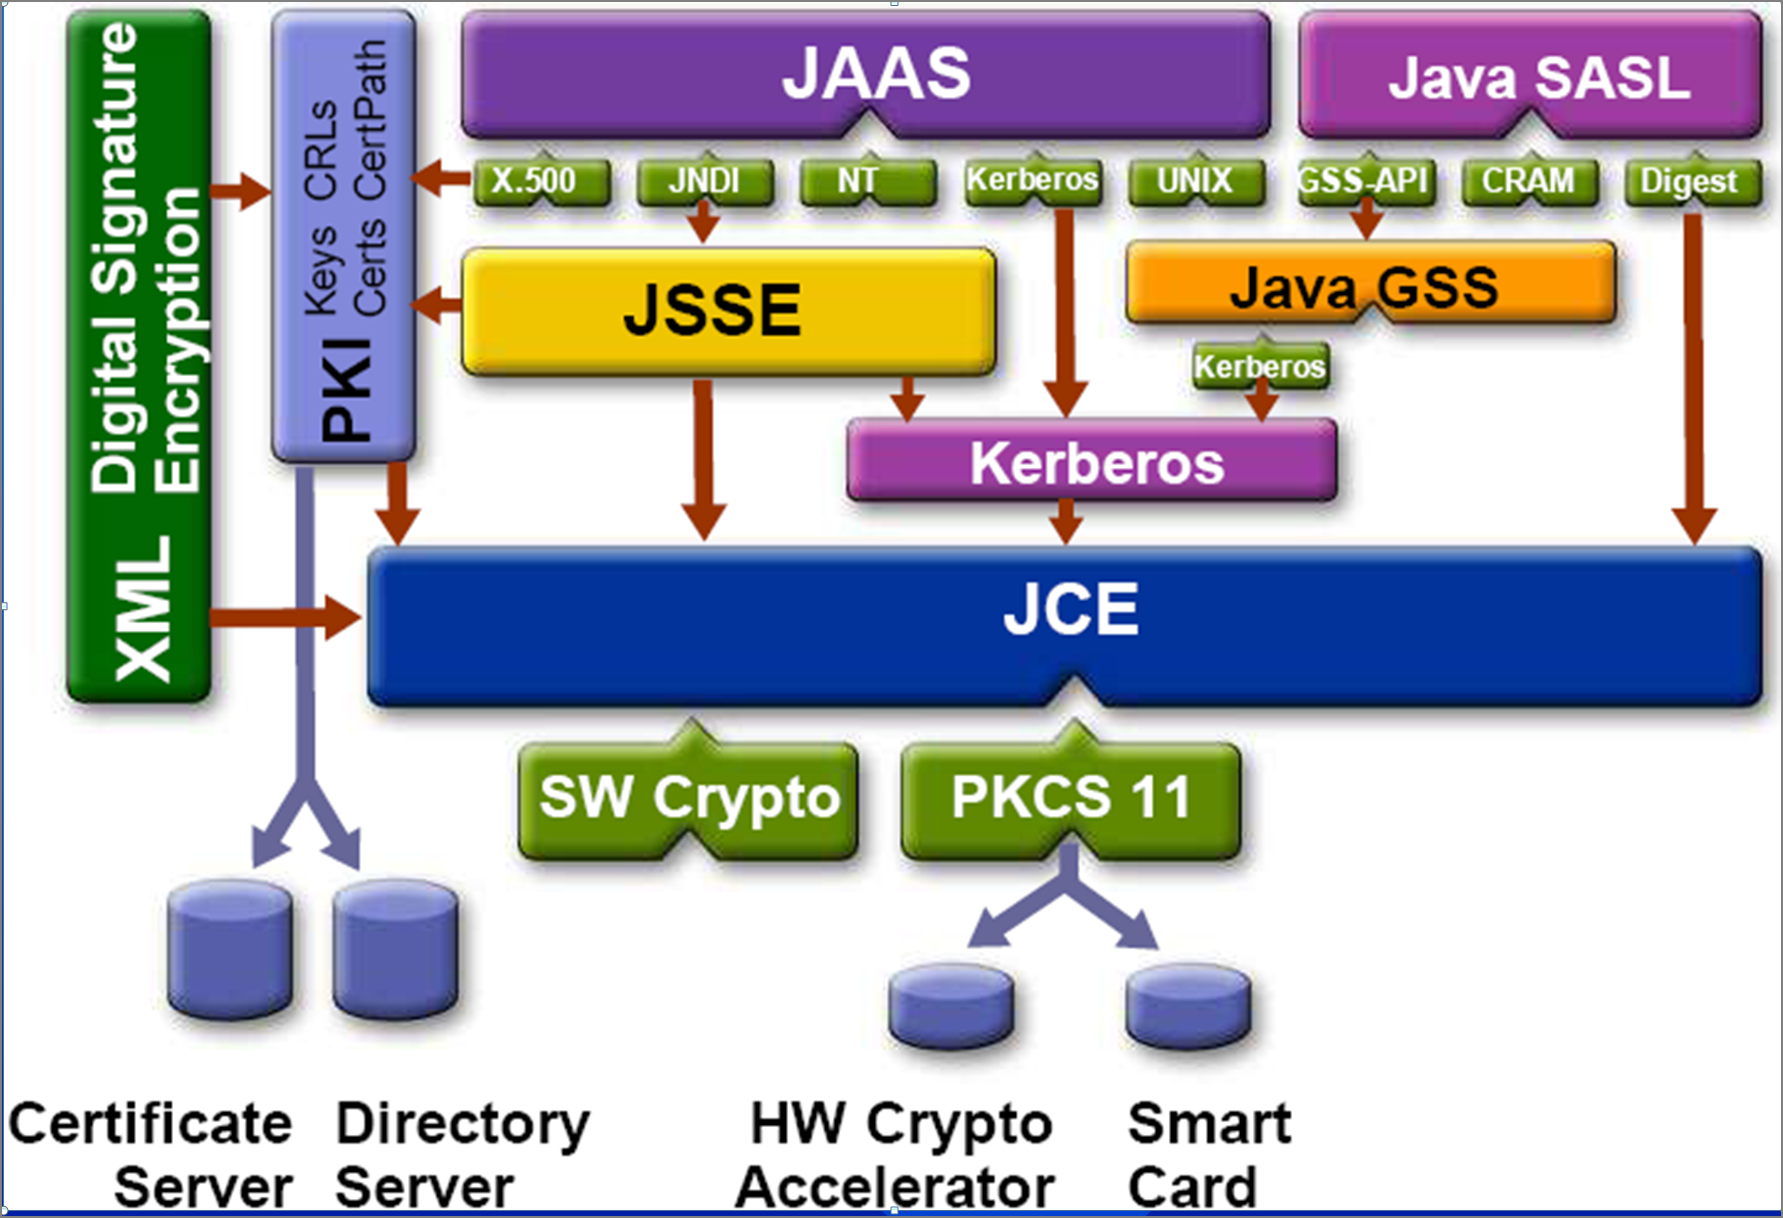 Java certpathvalidatorexception. Схема реализации java и Kerberos. Java сервис. Java управление телефоном. Java-станции.